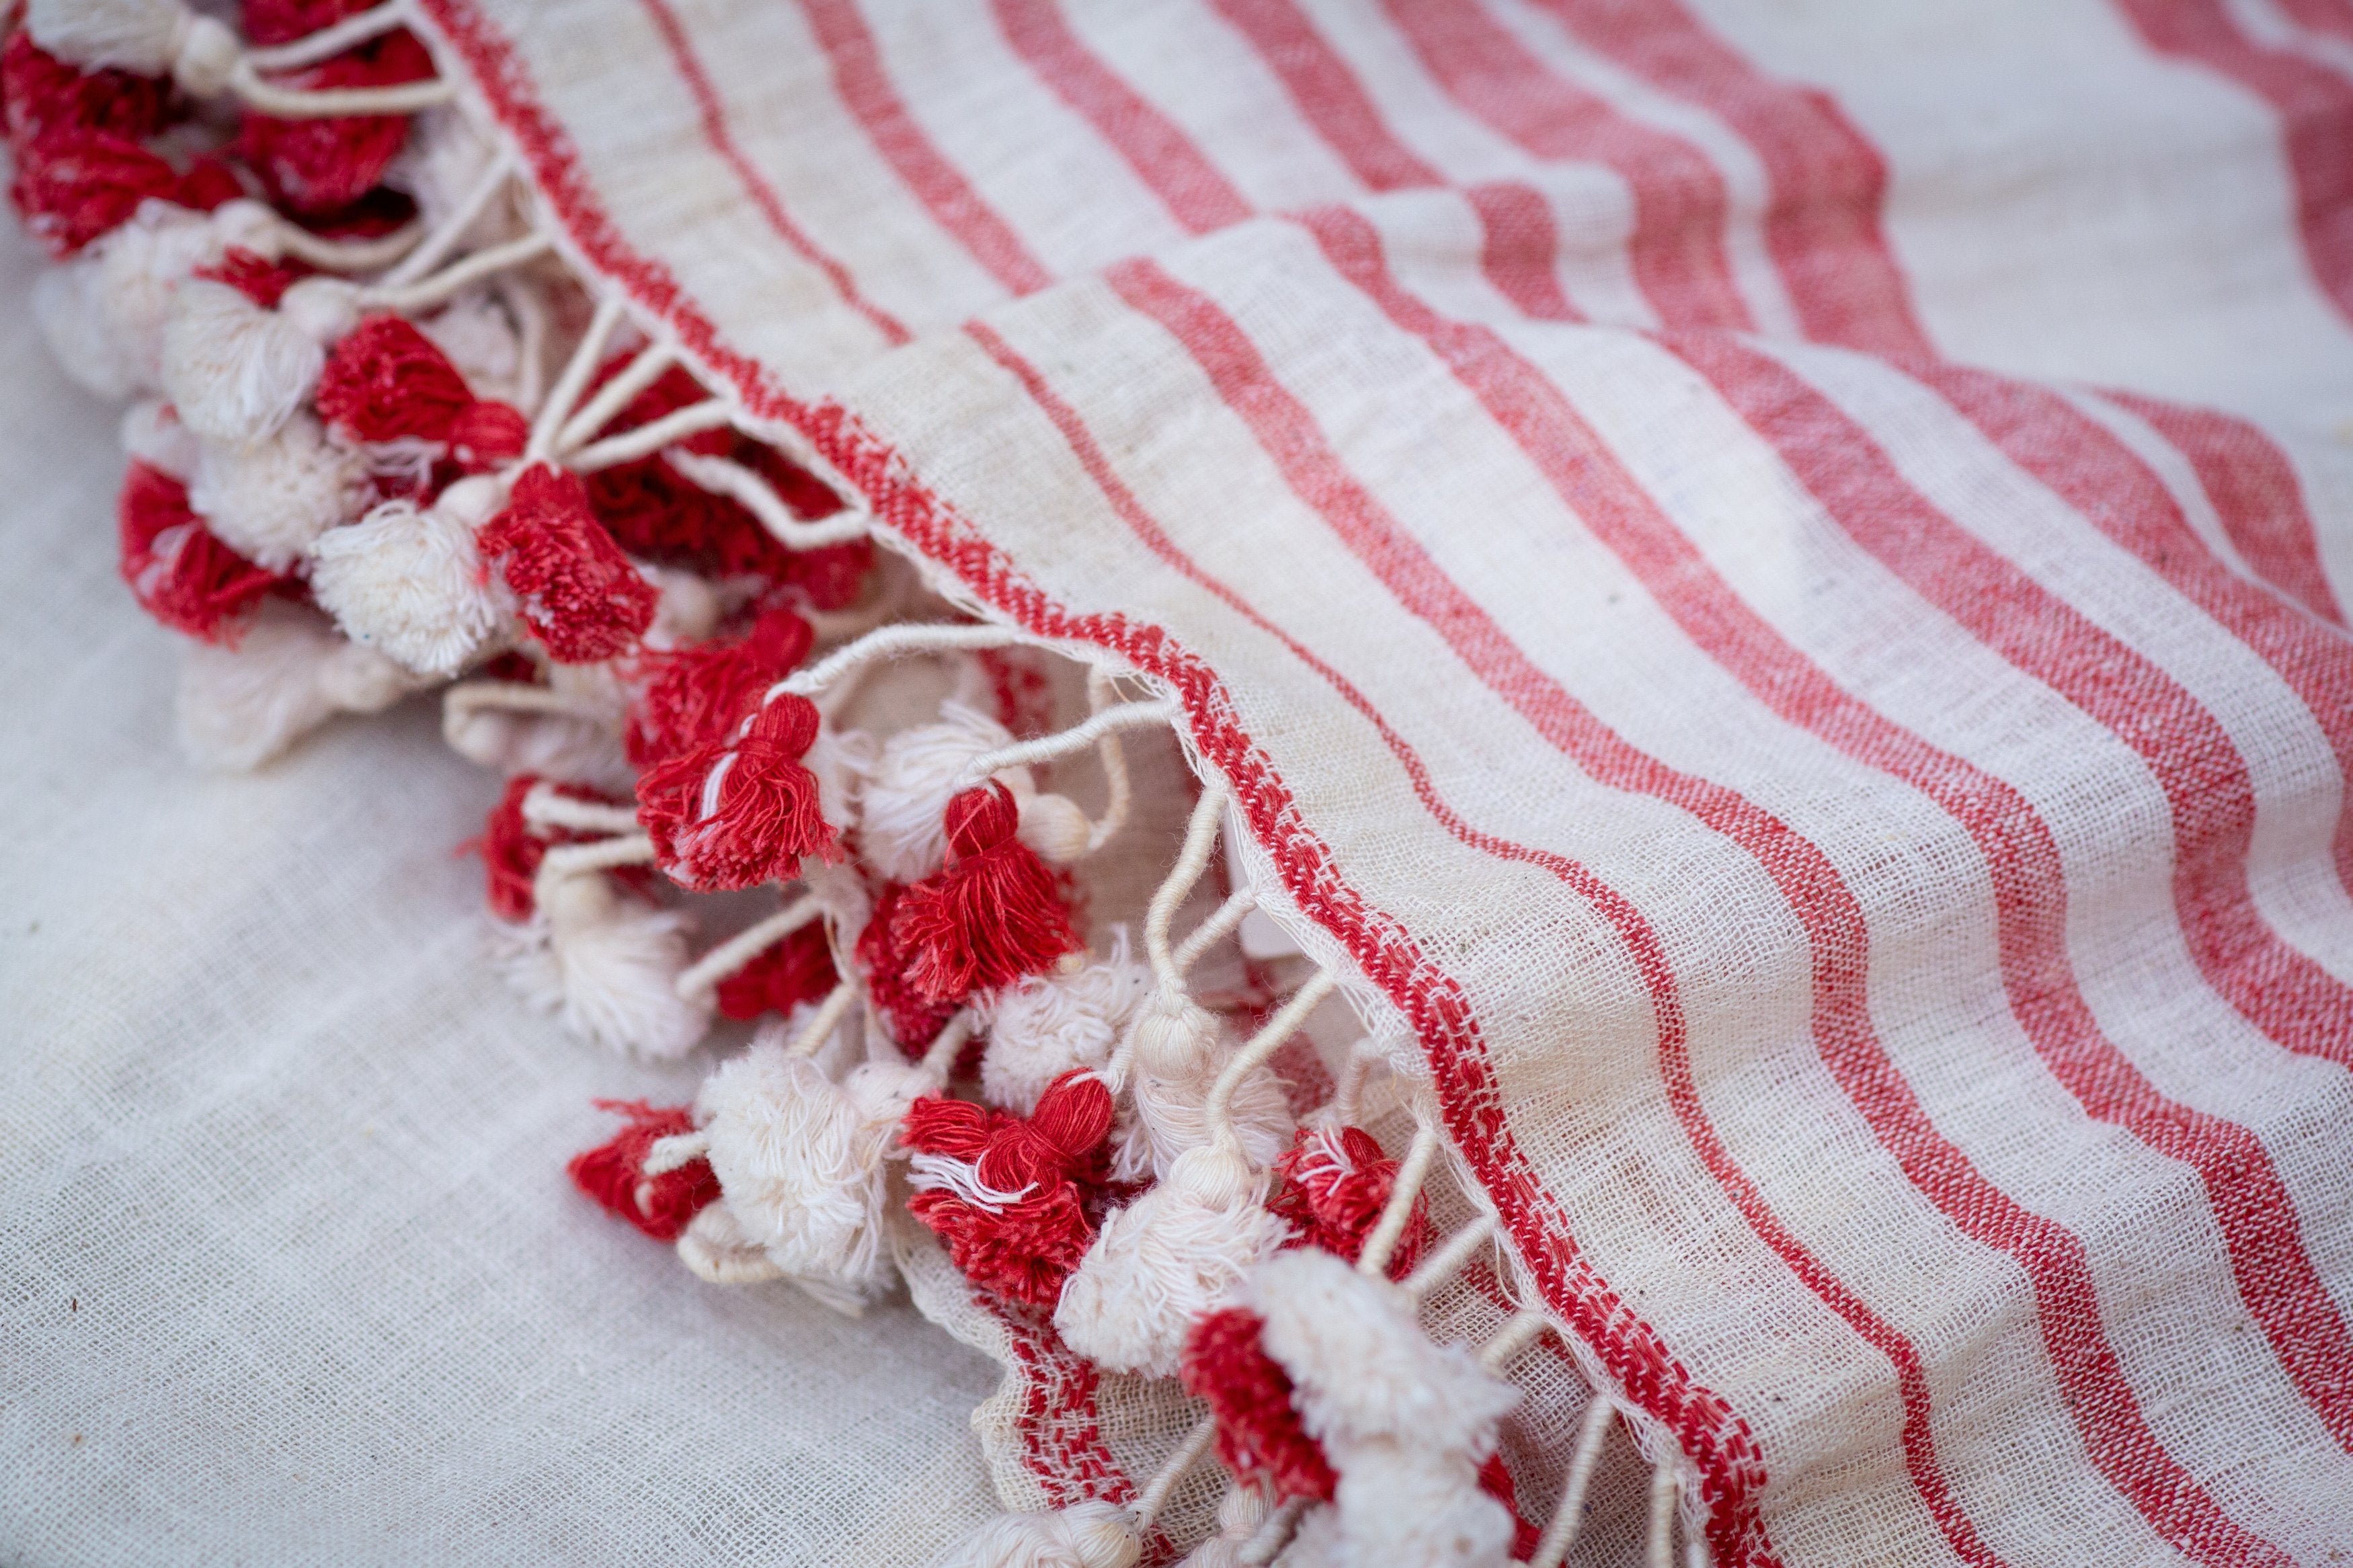 Shawl: Handwoven, hand spun organic Kala cotton